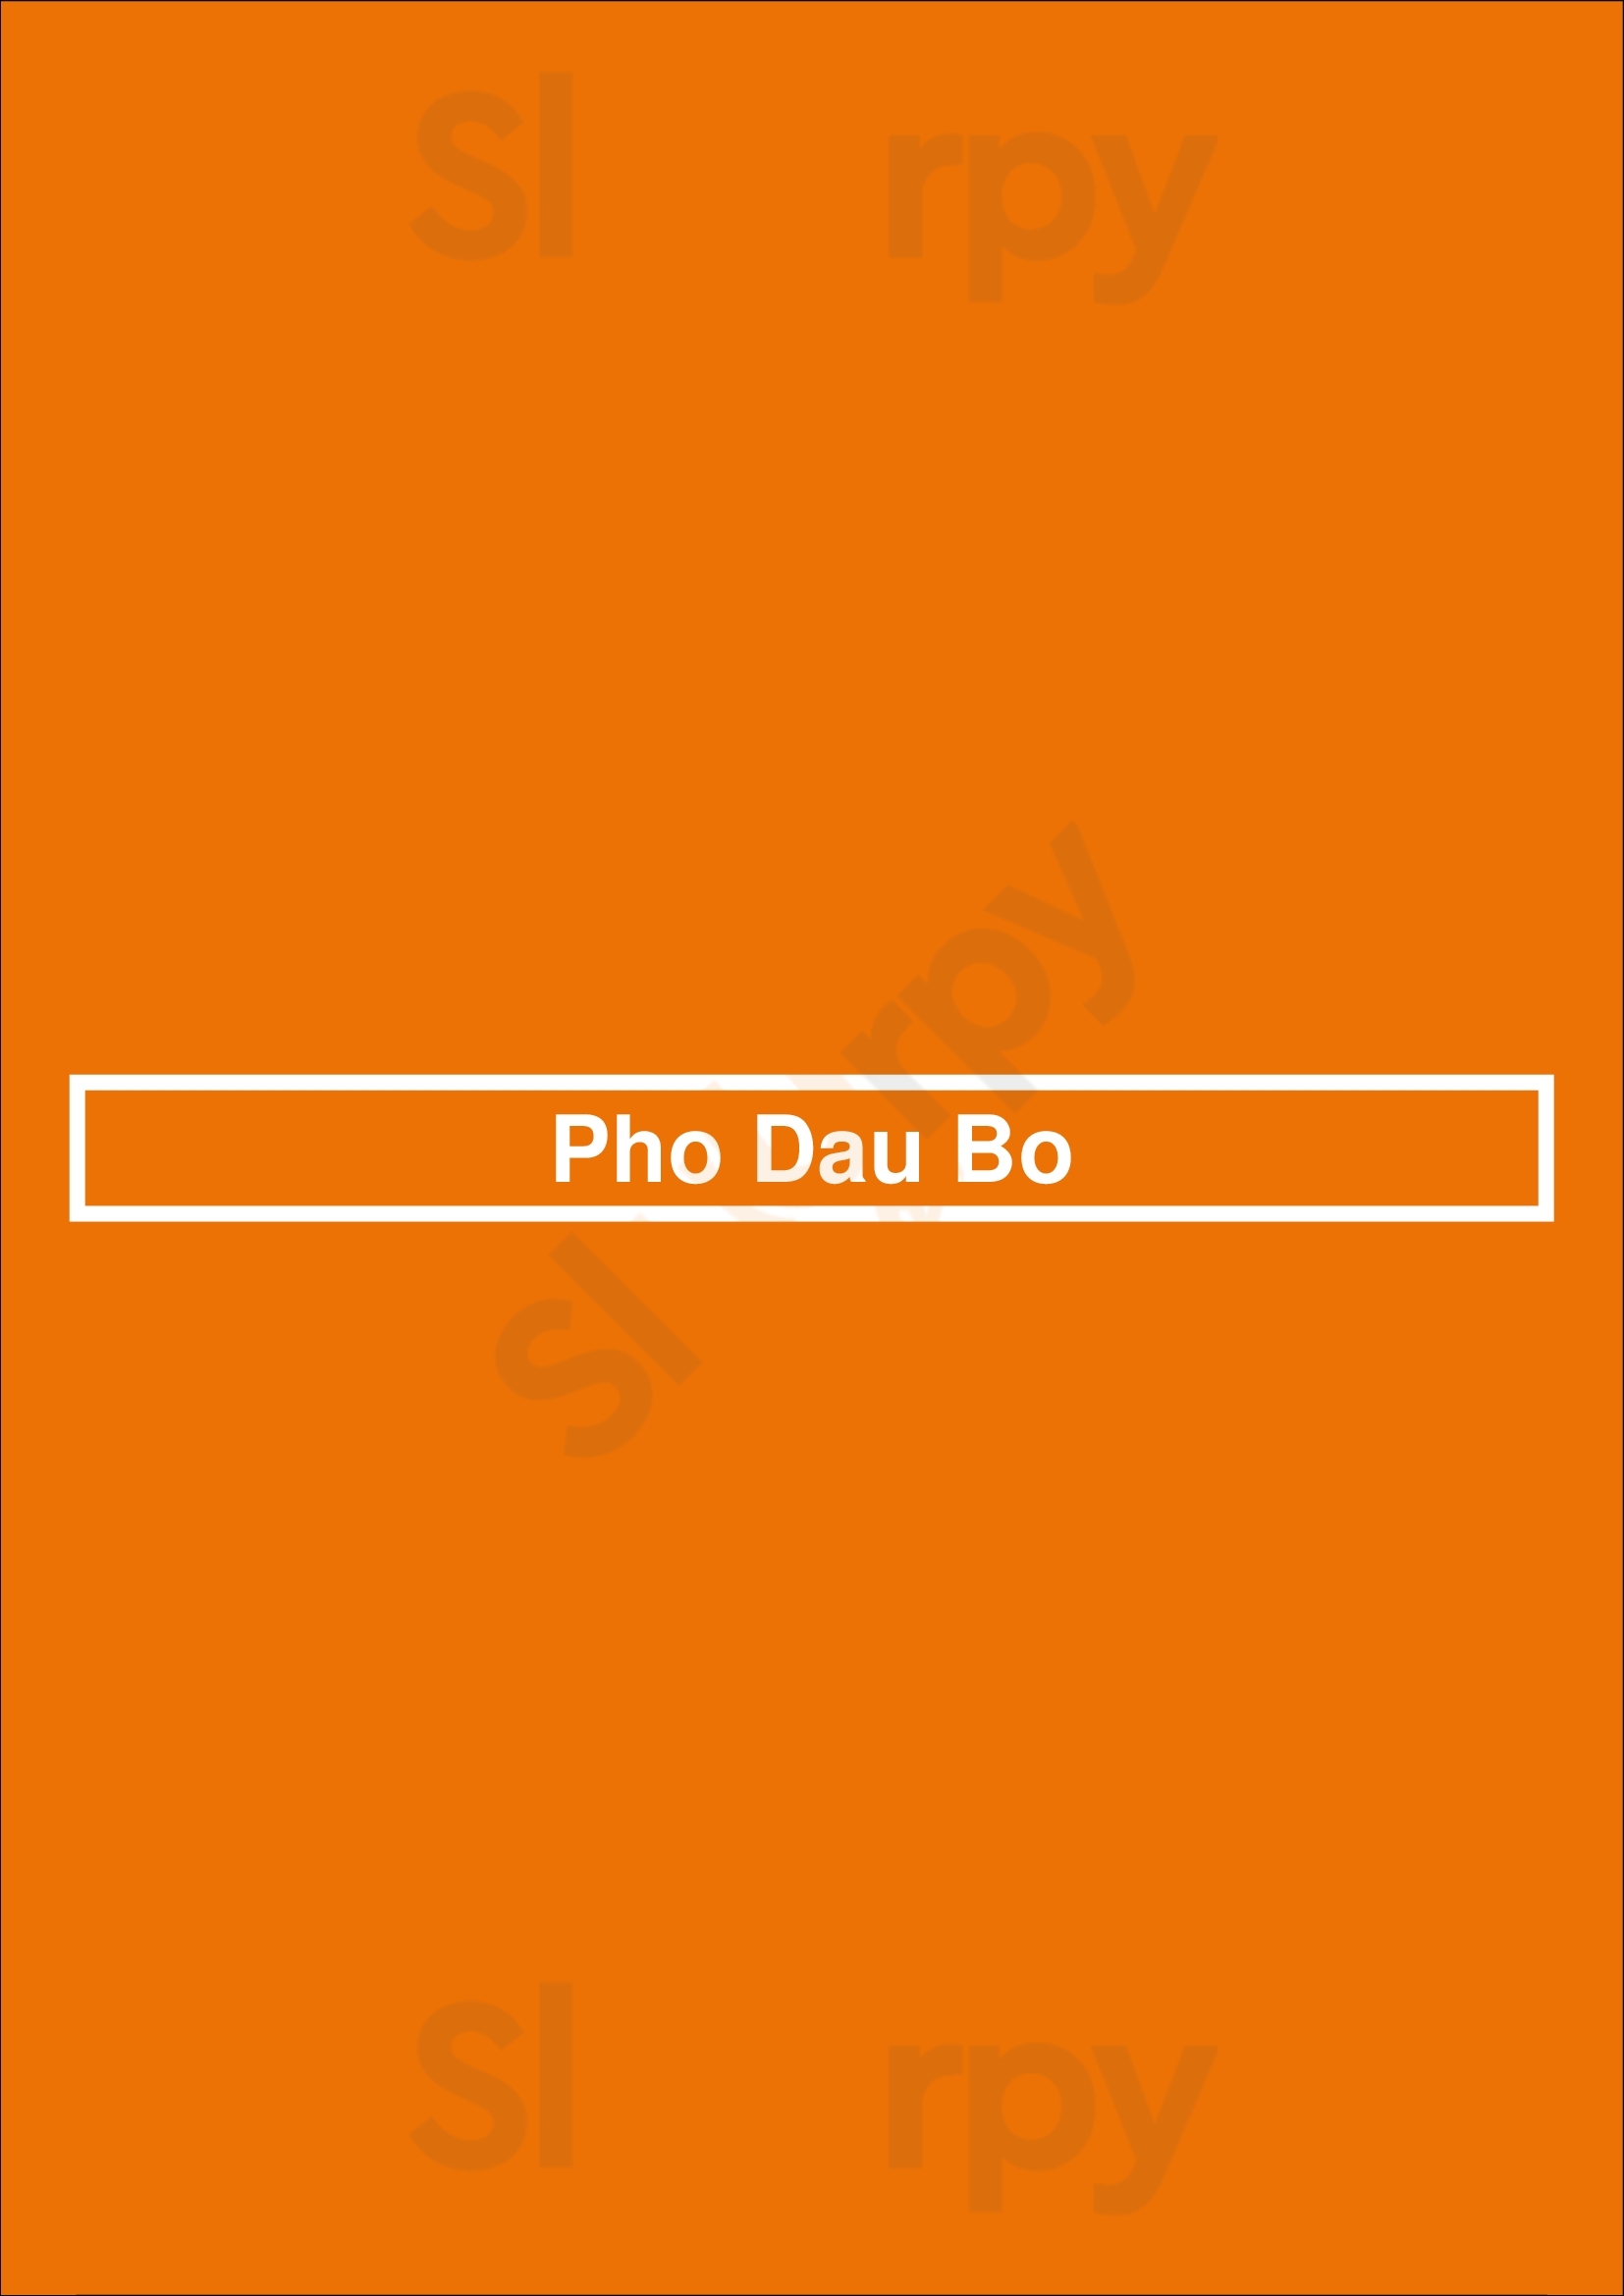 Pho Dau Bo Calgary Menu - 1